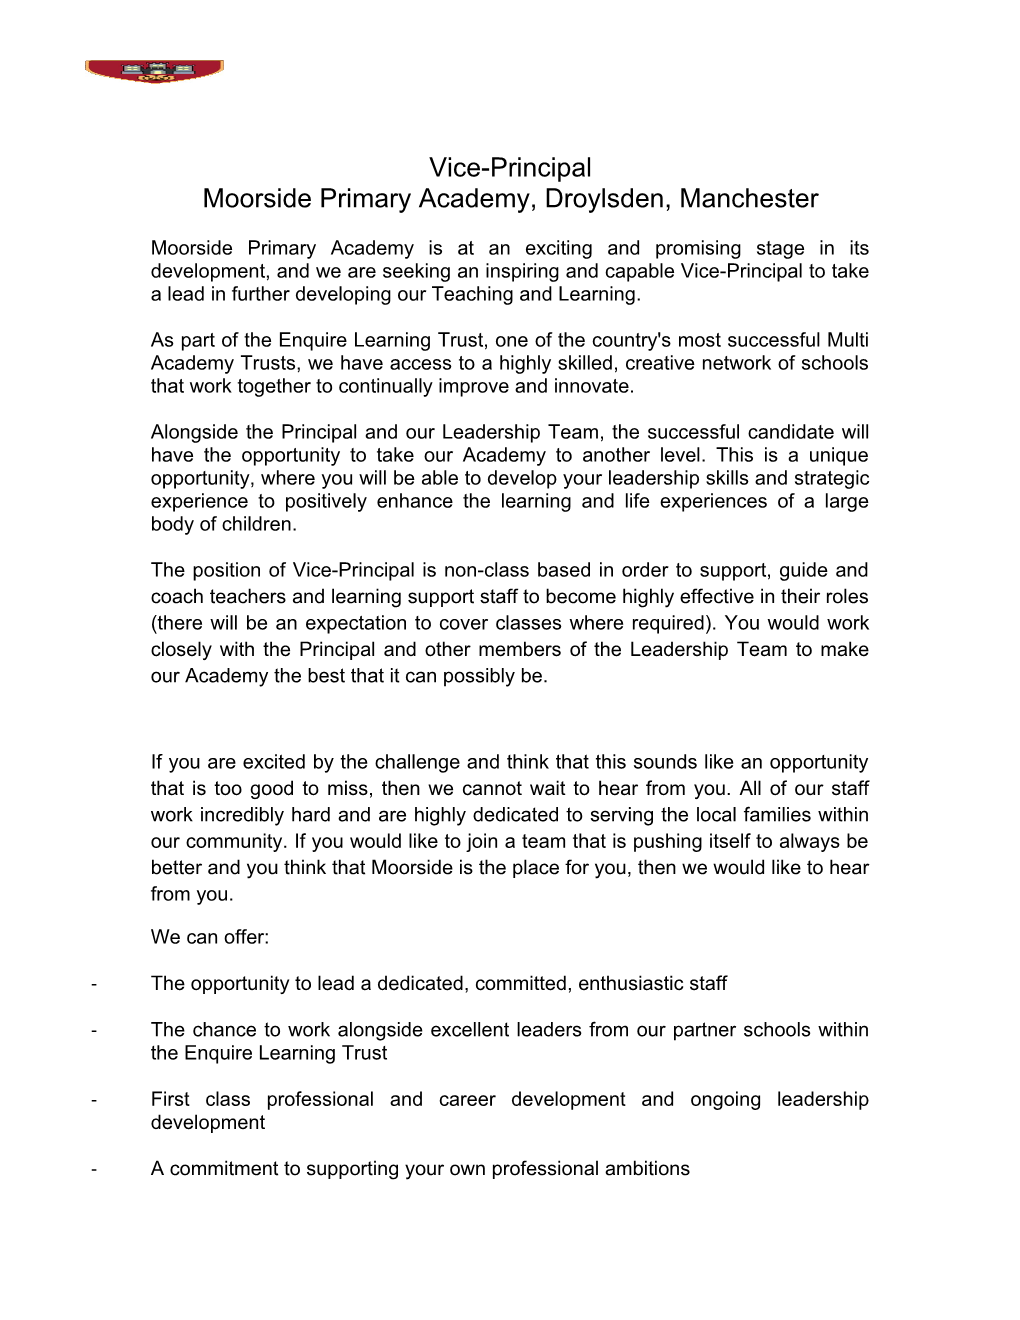 Moorside Primary Academy, Droylsden, Manchester